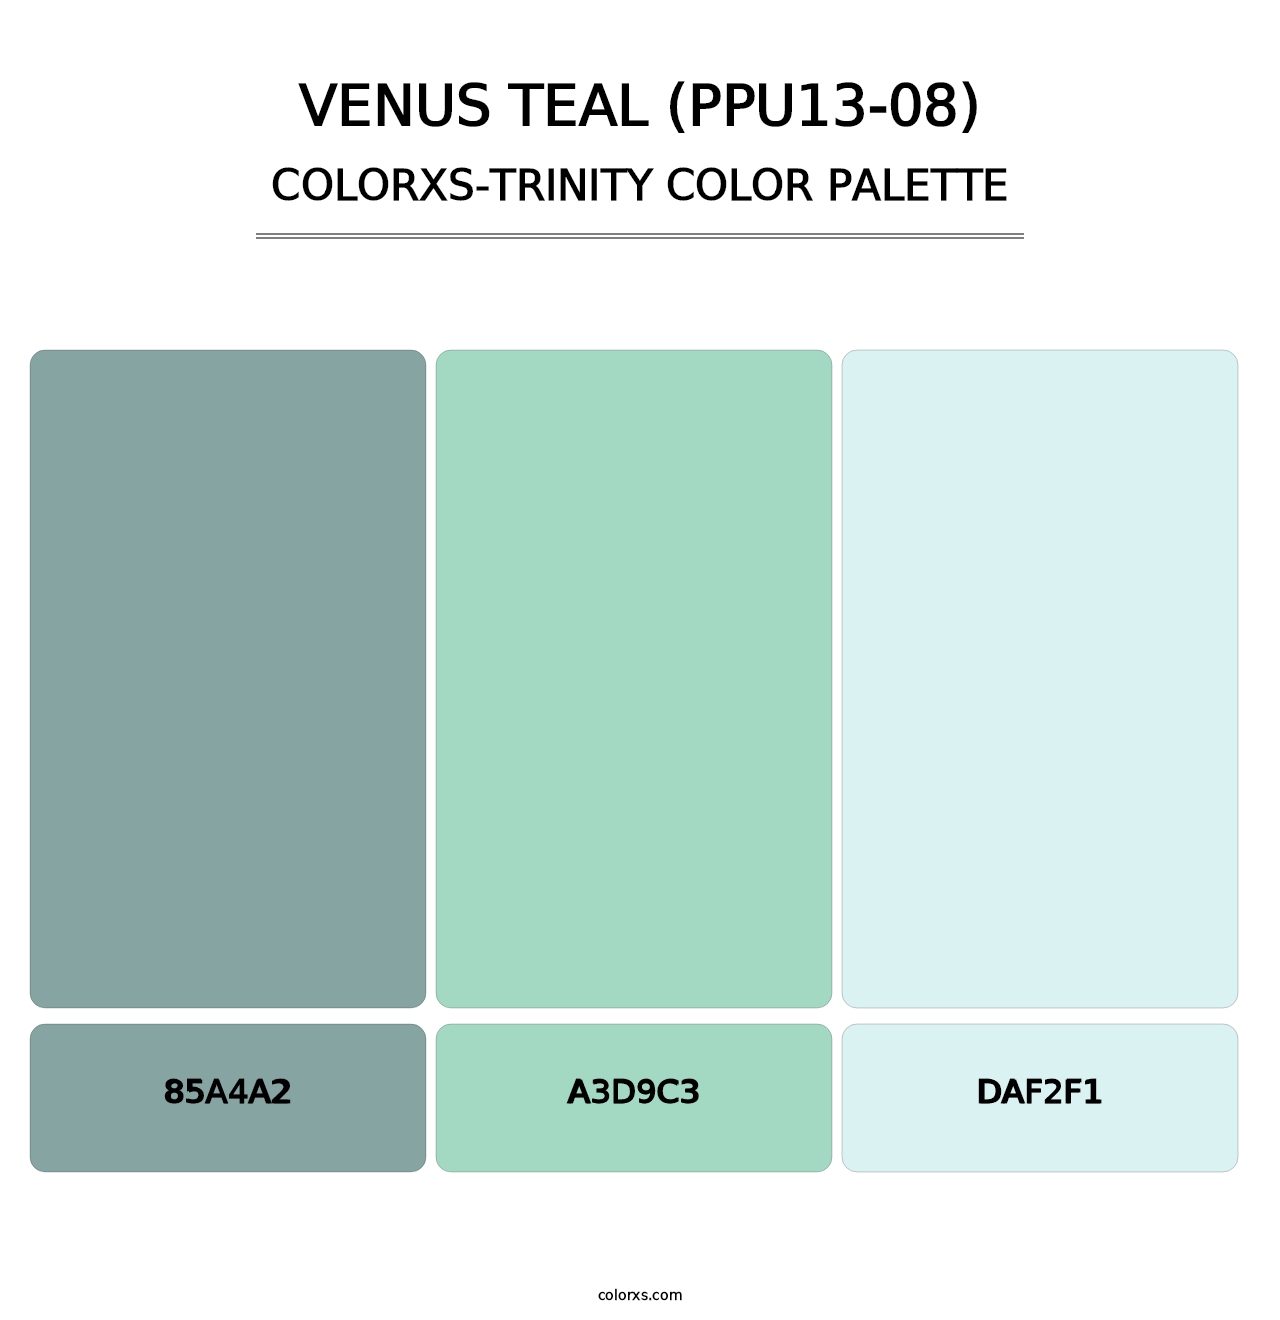 Venus Teal (PPU13-08) - Colorxs Trinity Palette